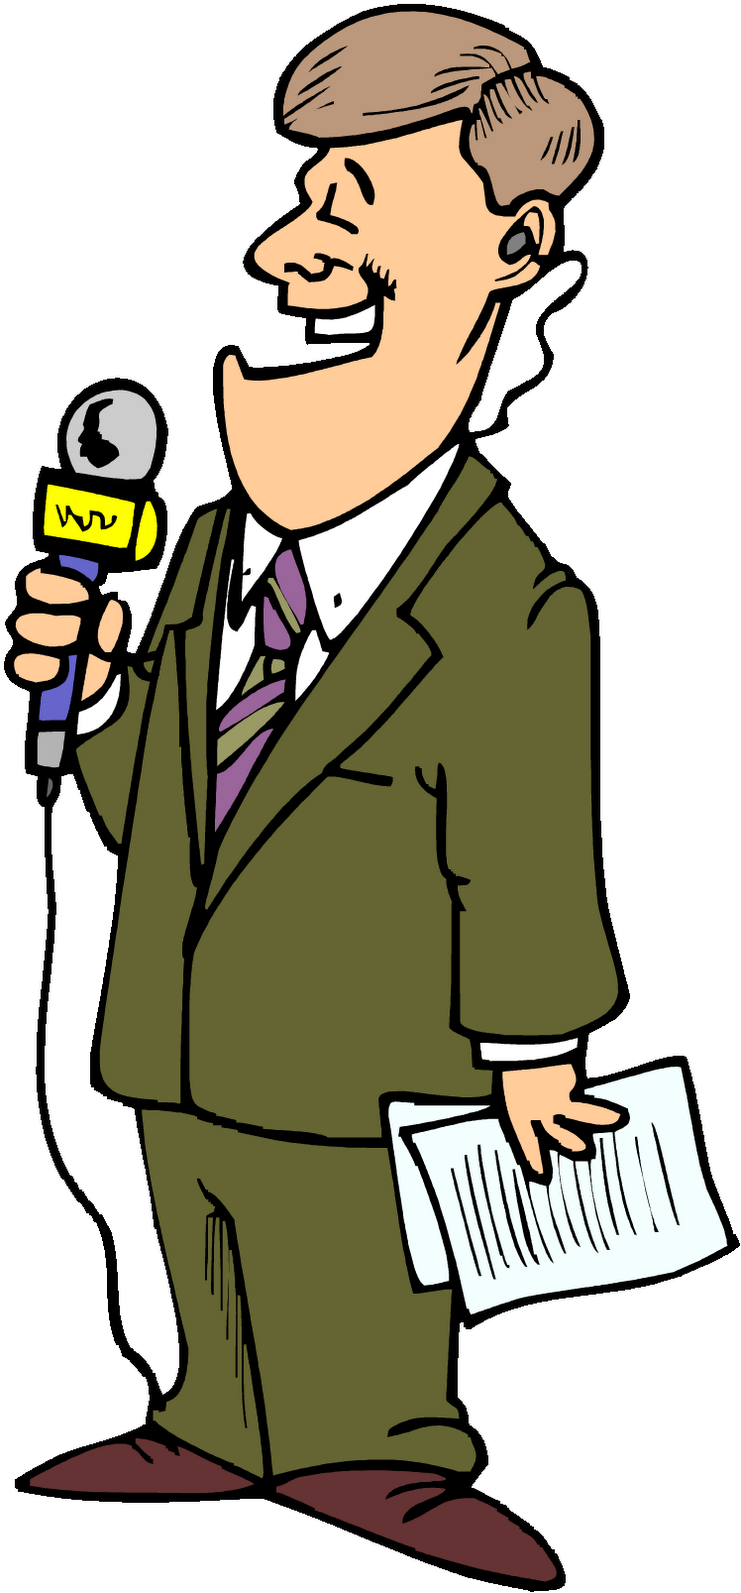 Cartoon A Cartoon Of A Man Holding A Microphone